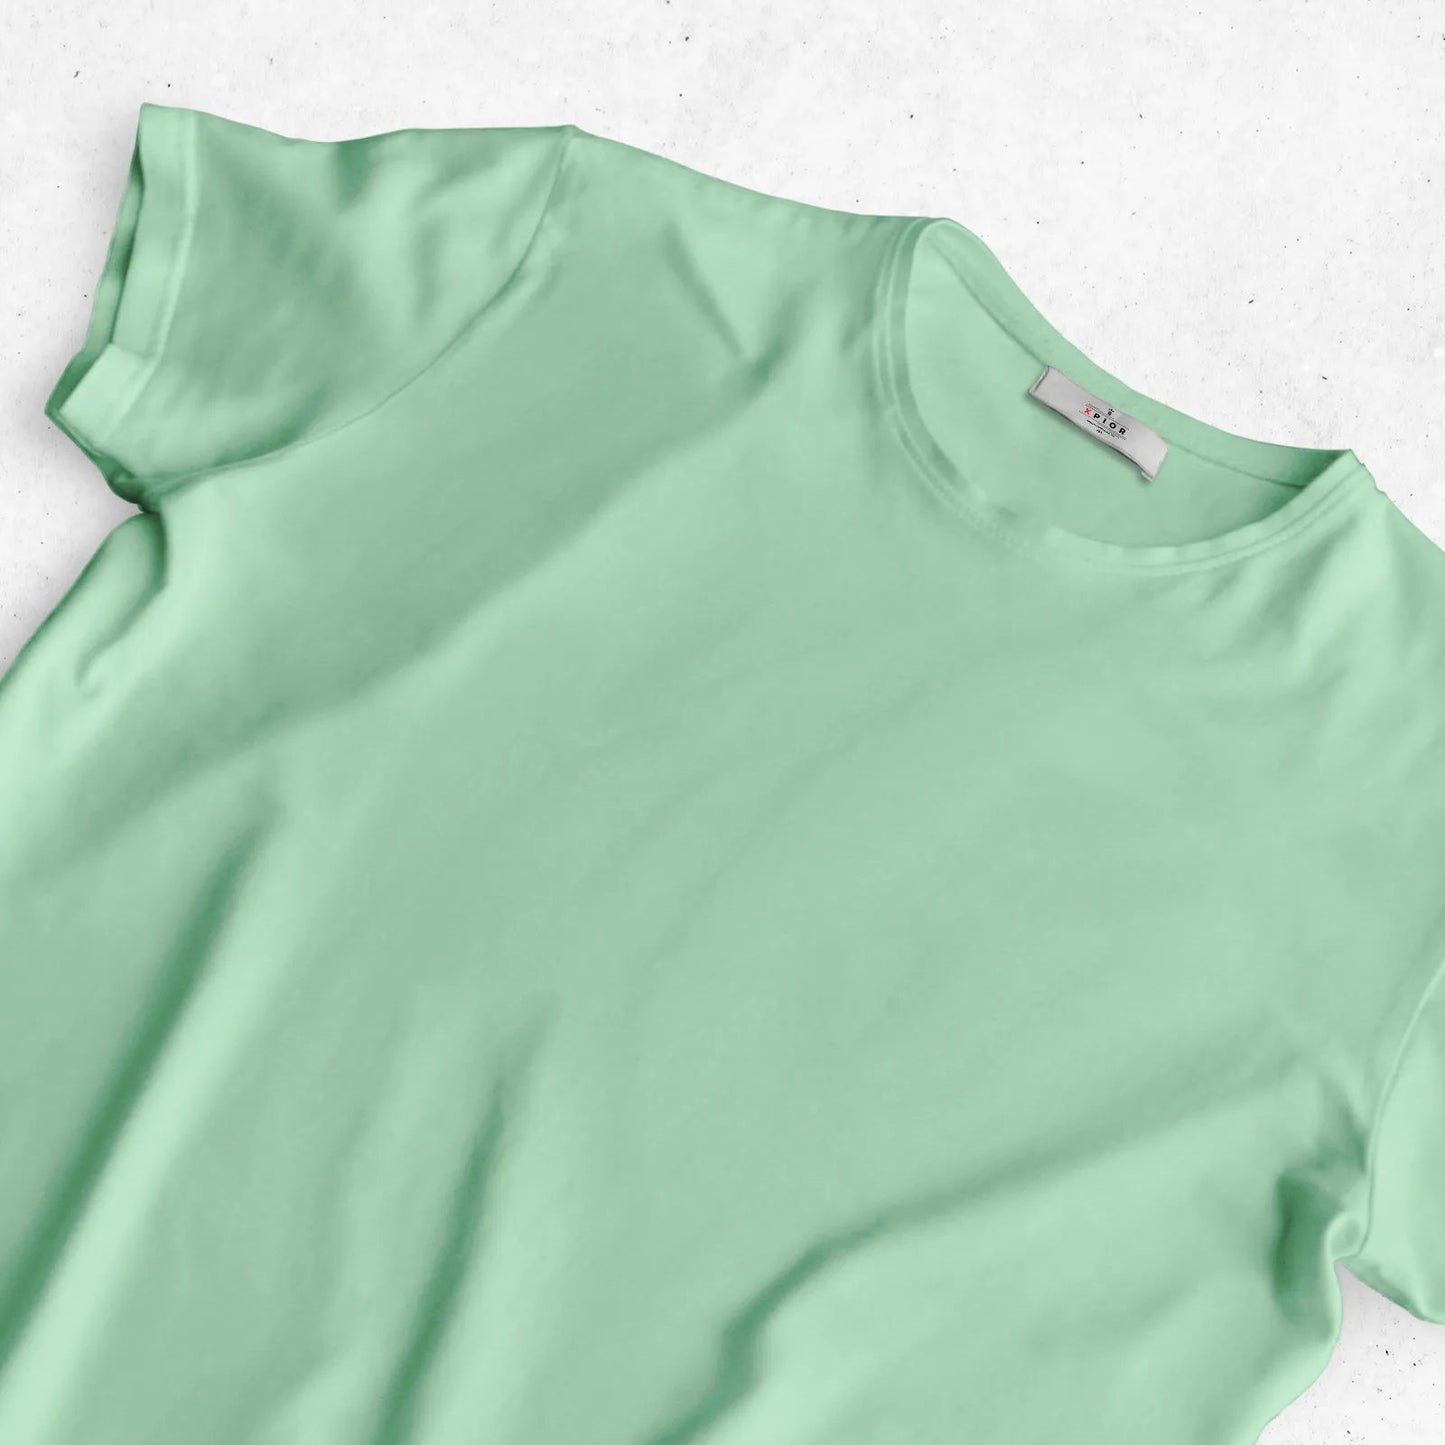 Energetic Half Sleeve Round Neck Green Color Men's Cotton T-Shirt Plain